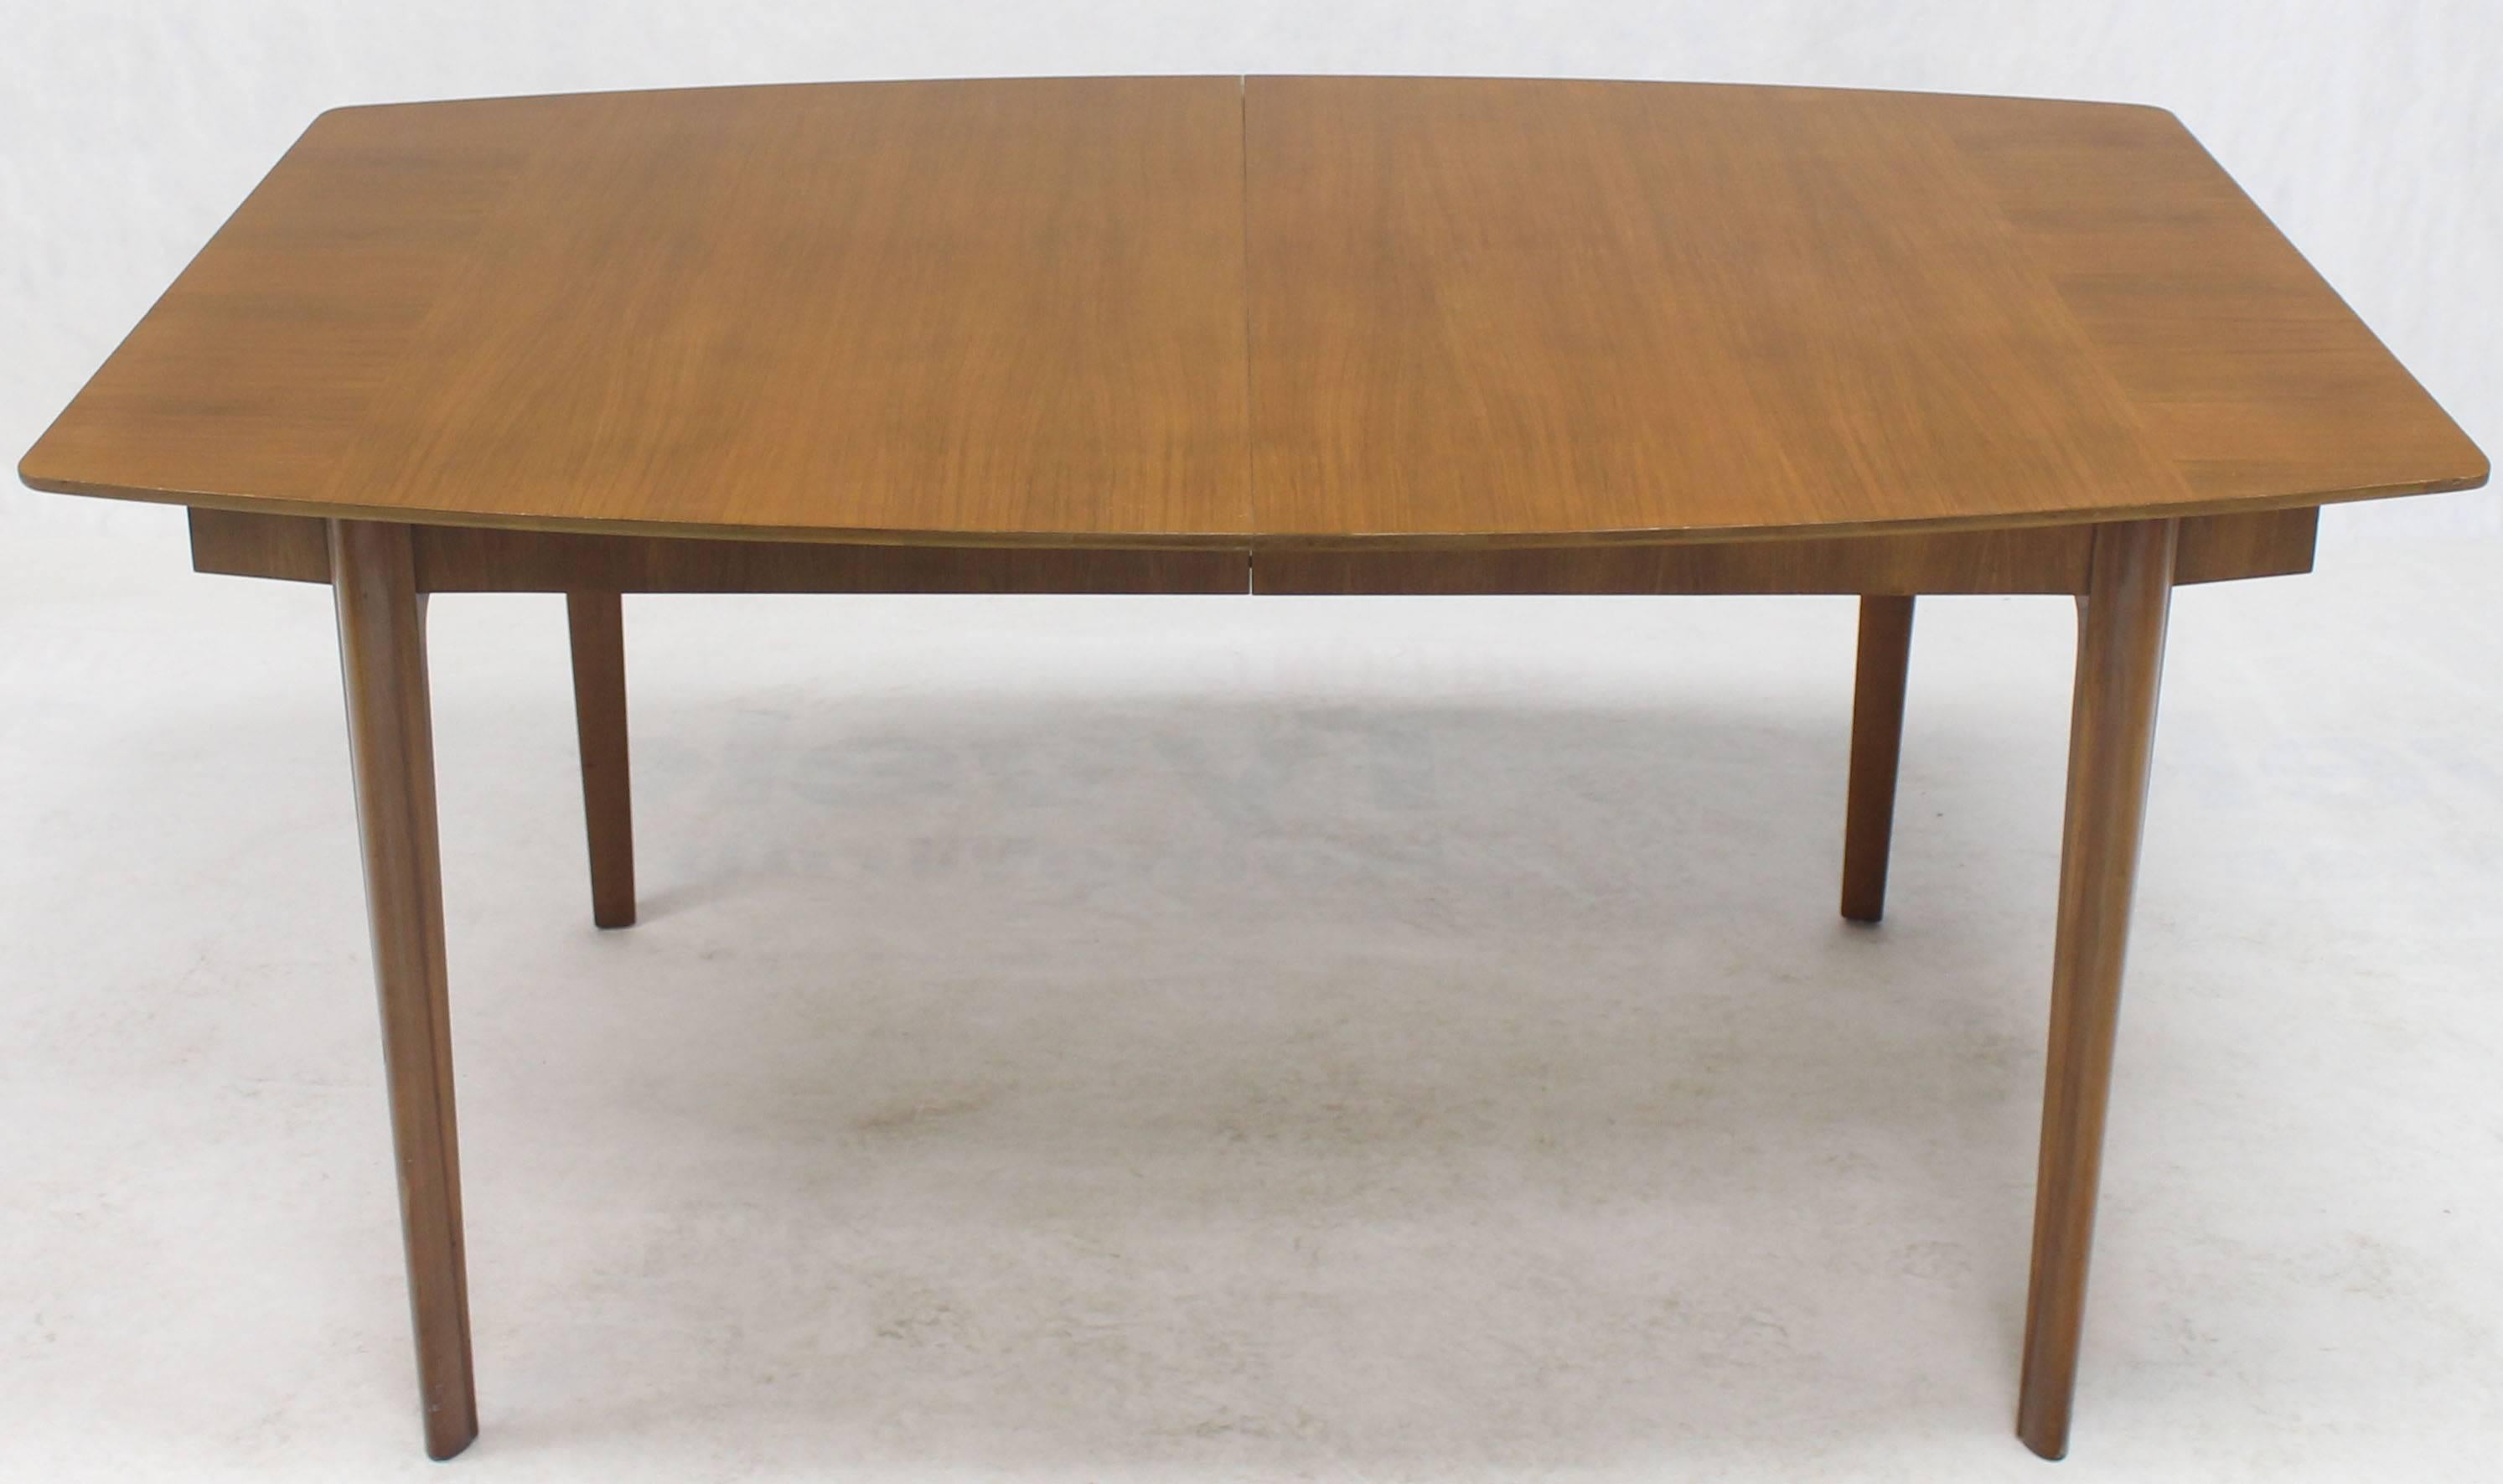 Solid mid century modern medium walnut dining table by Widdicomb. Two 18